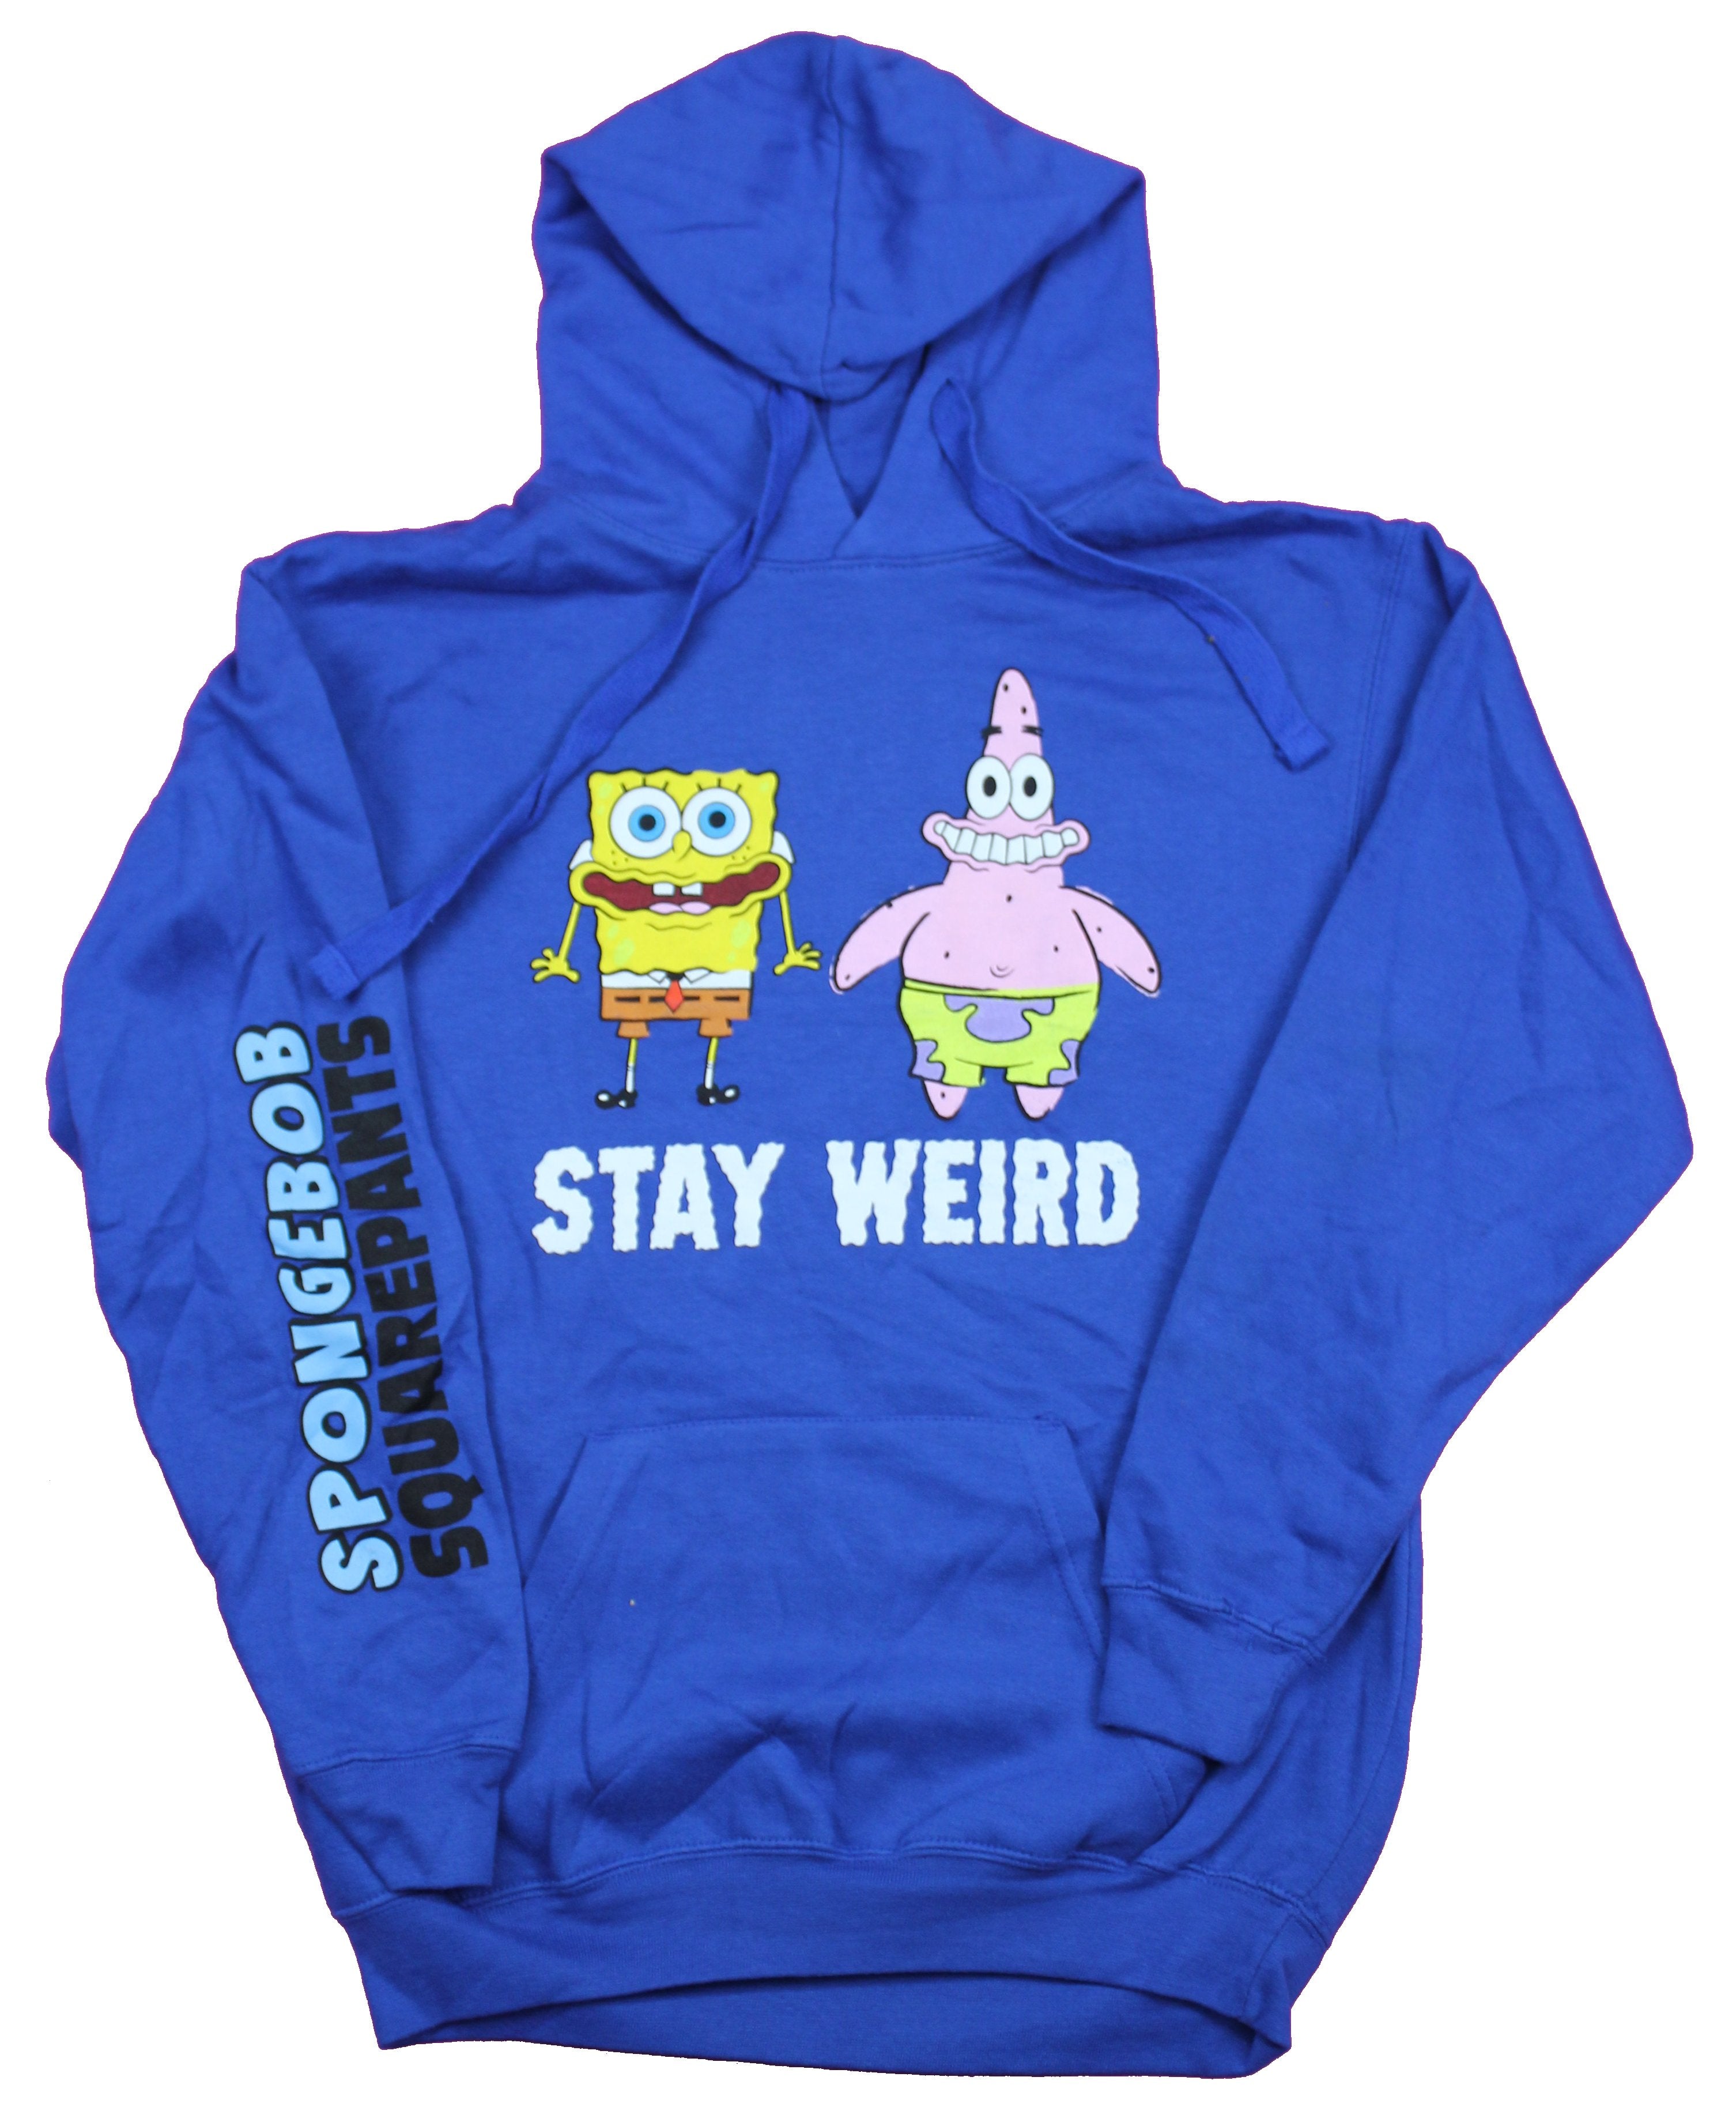 Spongebob Squarepants Pullover Hoodie - Stay Weird Bob & Patrick Image